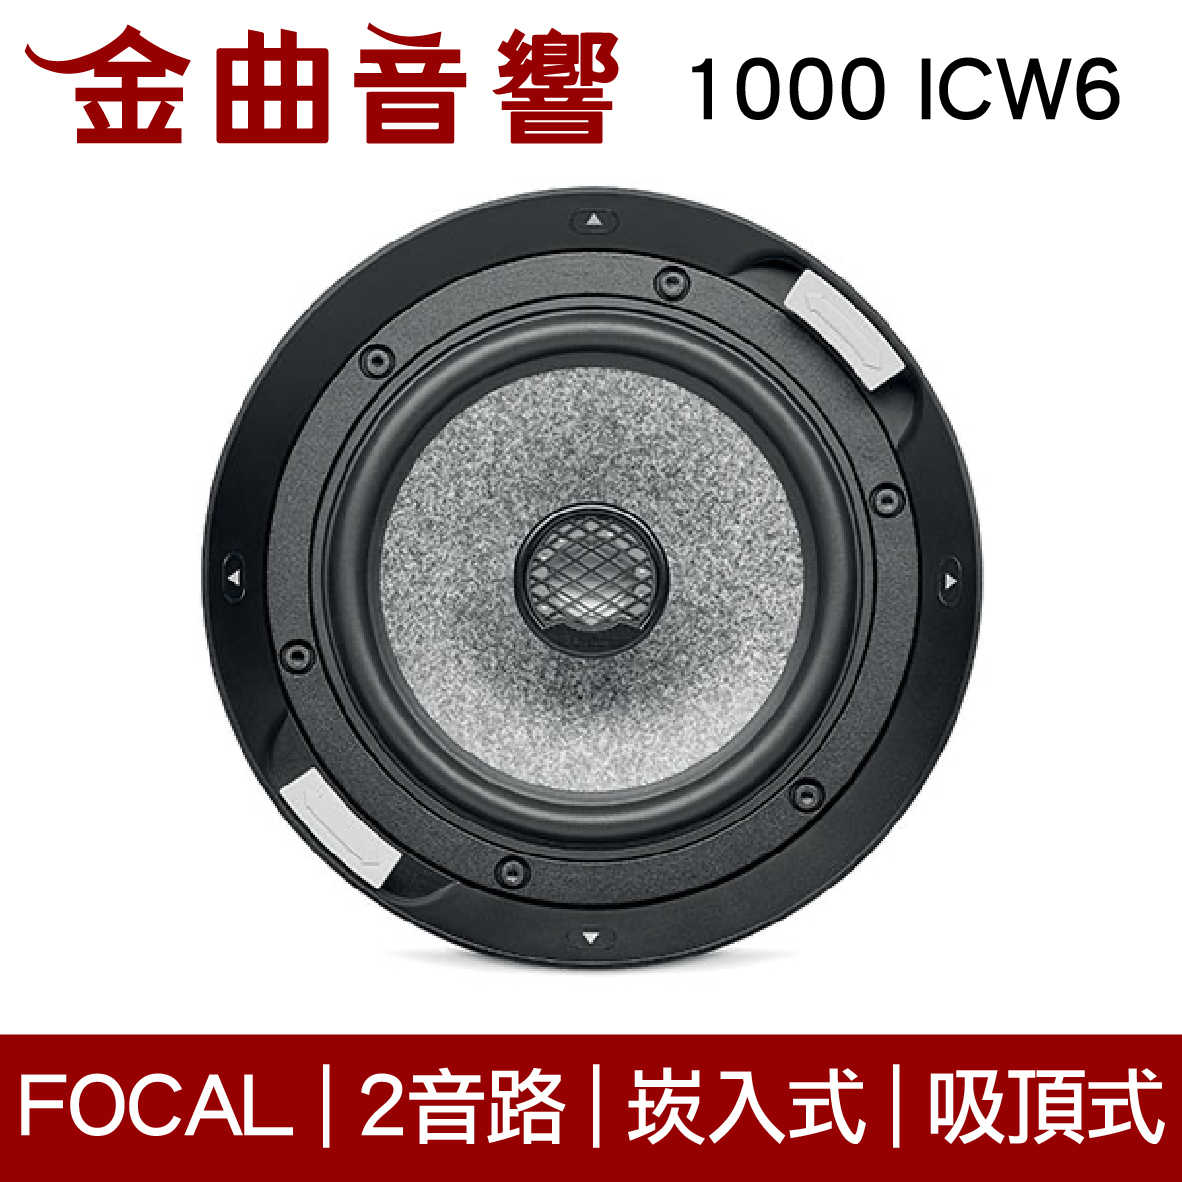 FOCAL 1000 ICW6 二音路 崁入式 喇叭 吸頂喇叭 音響（單隻）| 金曲音響